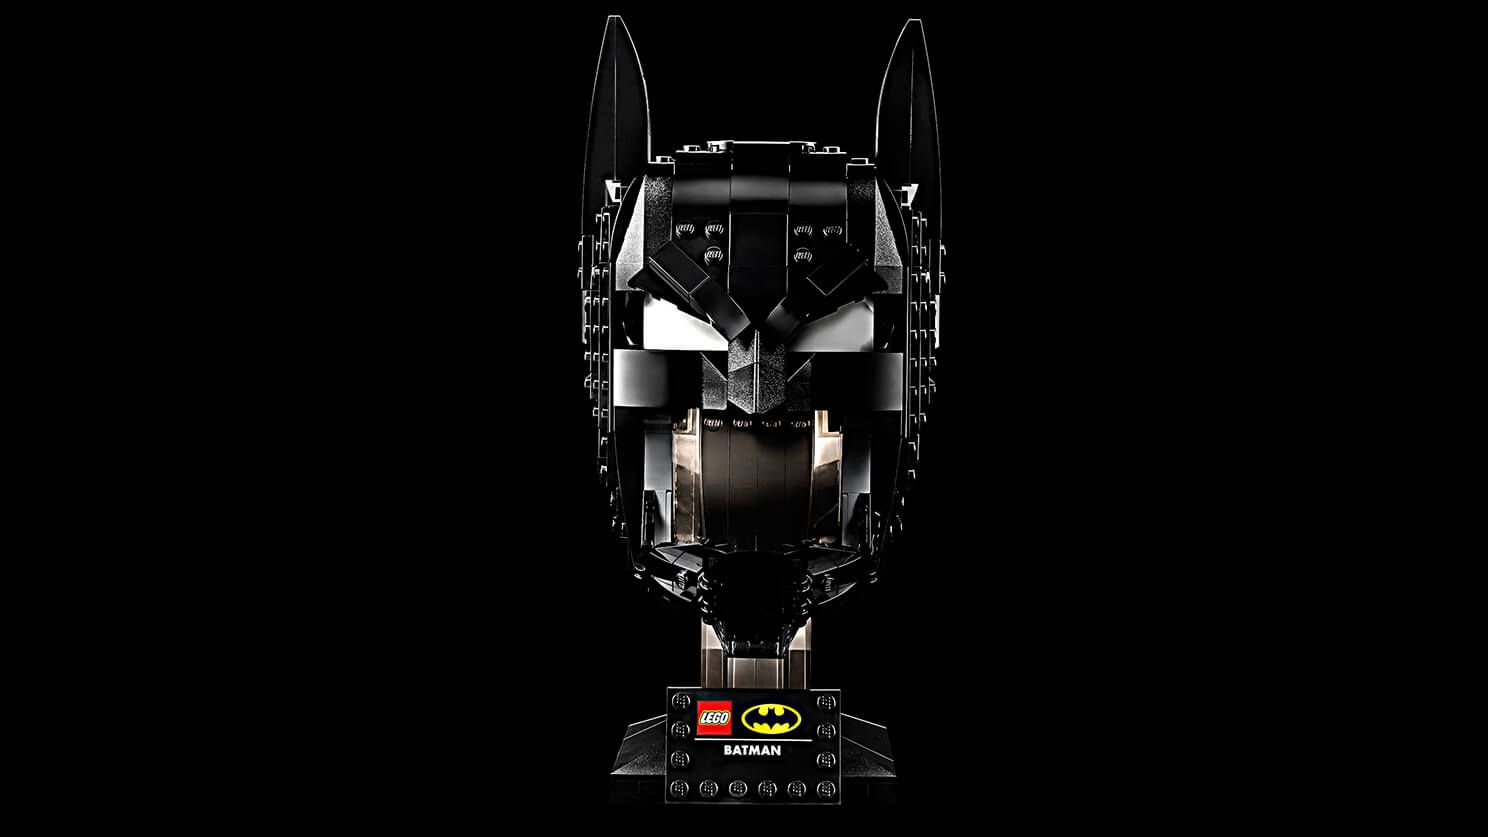 LEGO Super Heroes 76182 Batman™ Helm LEGO_76182_WEB_SEC02_1488.jpg